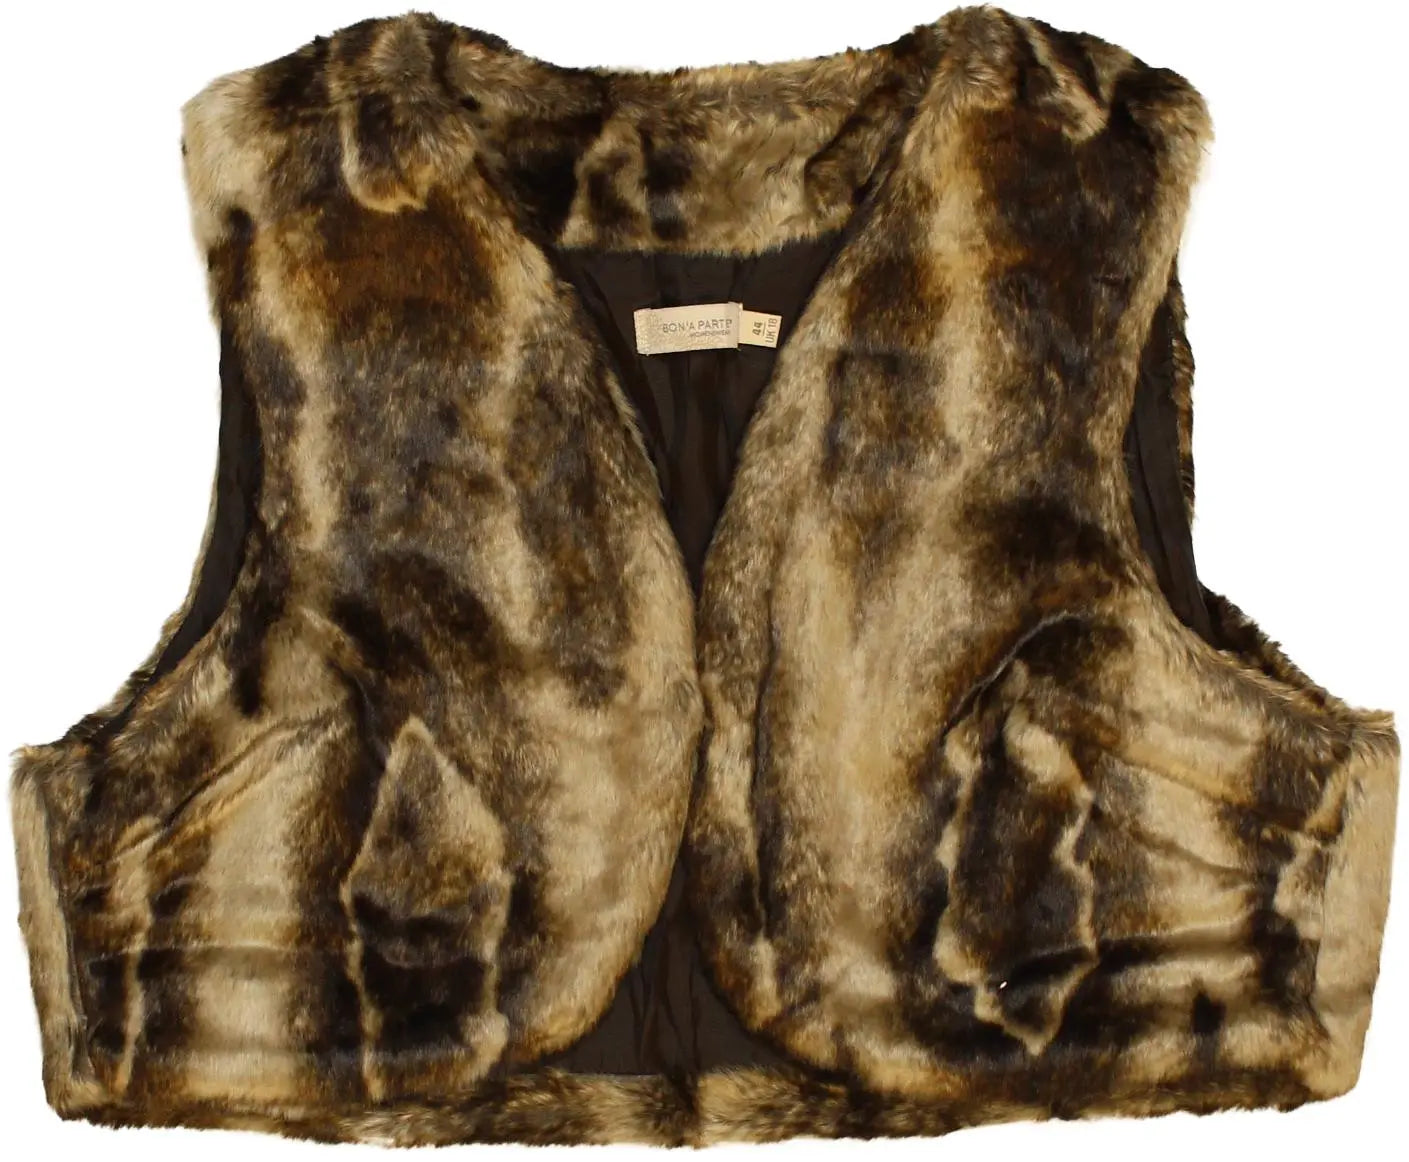 Bon A Parte - Faux Fur Waistcoat- ThriftTale.com - Vintage and second handclothing